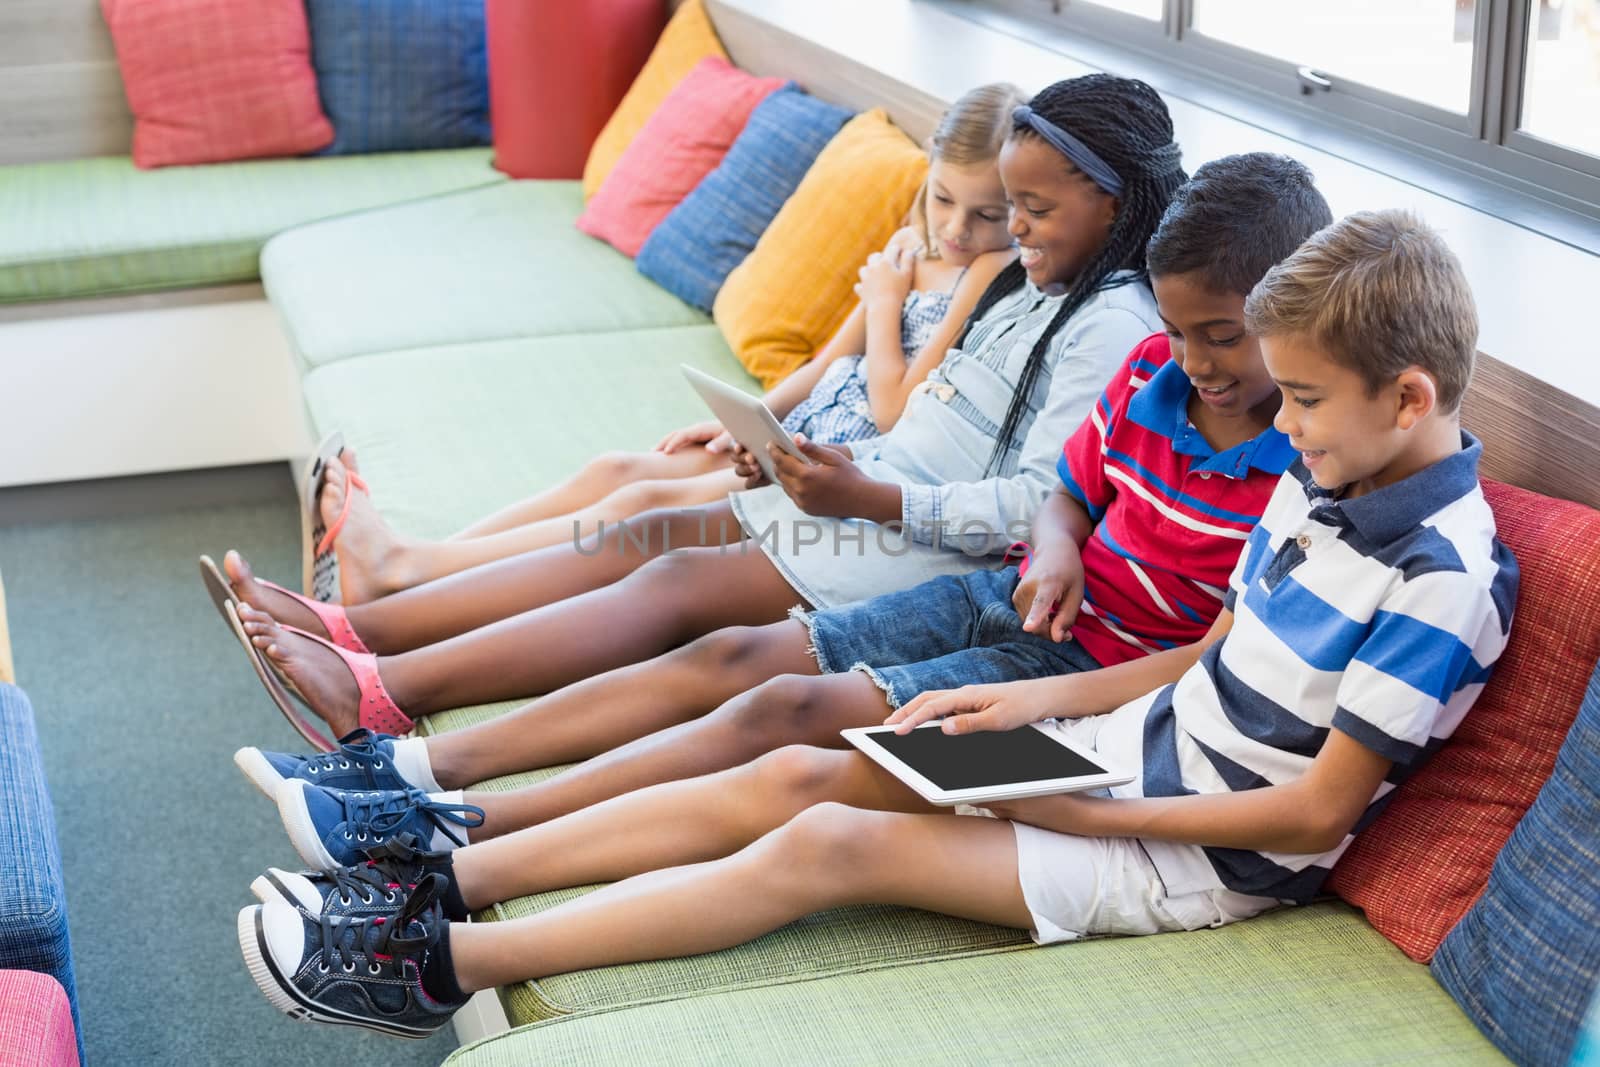 School kids sitting on sofa and using digital tablet in library by Wavebreakmedia